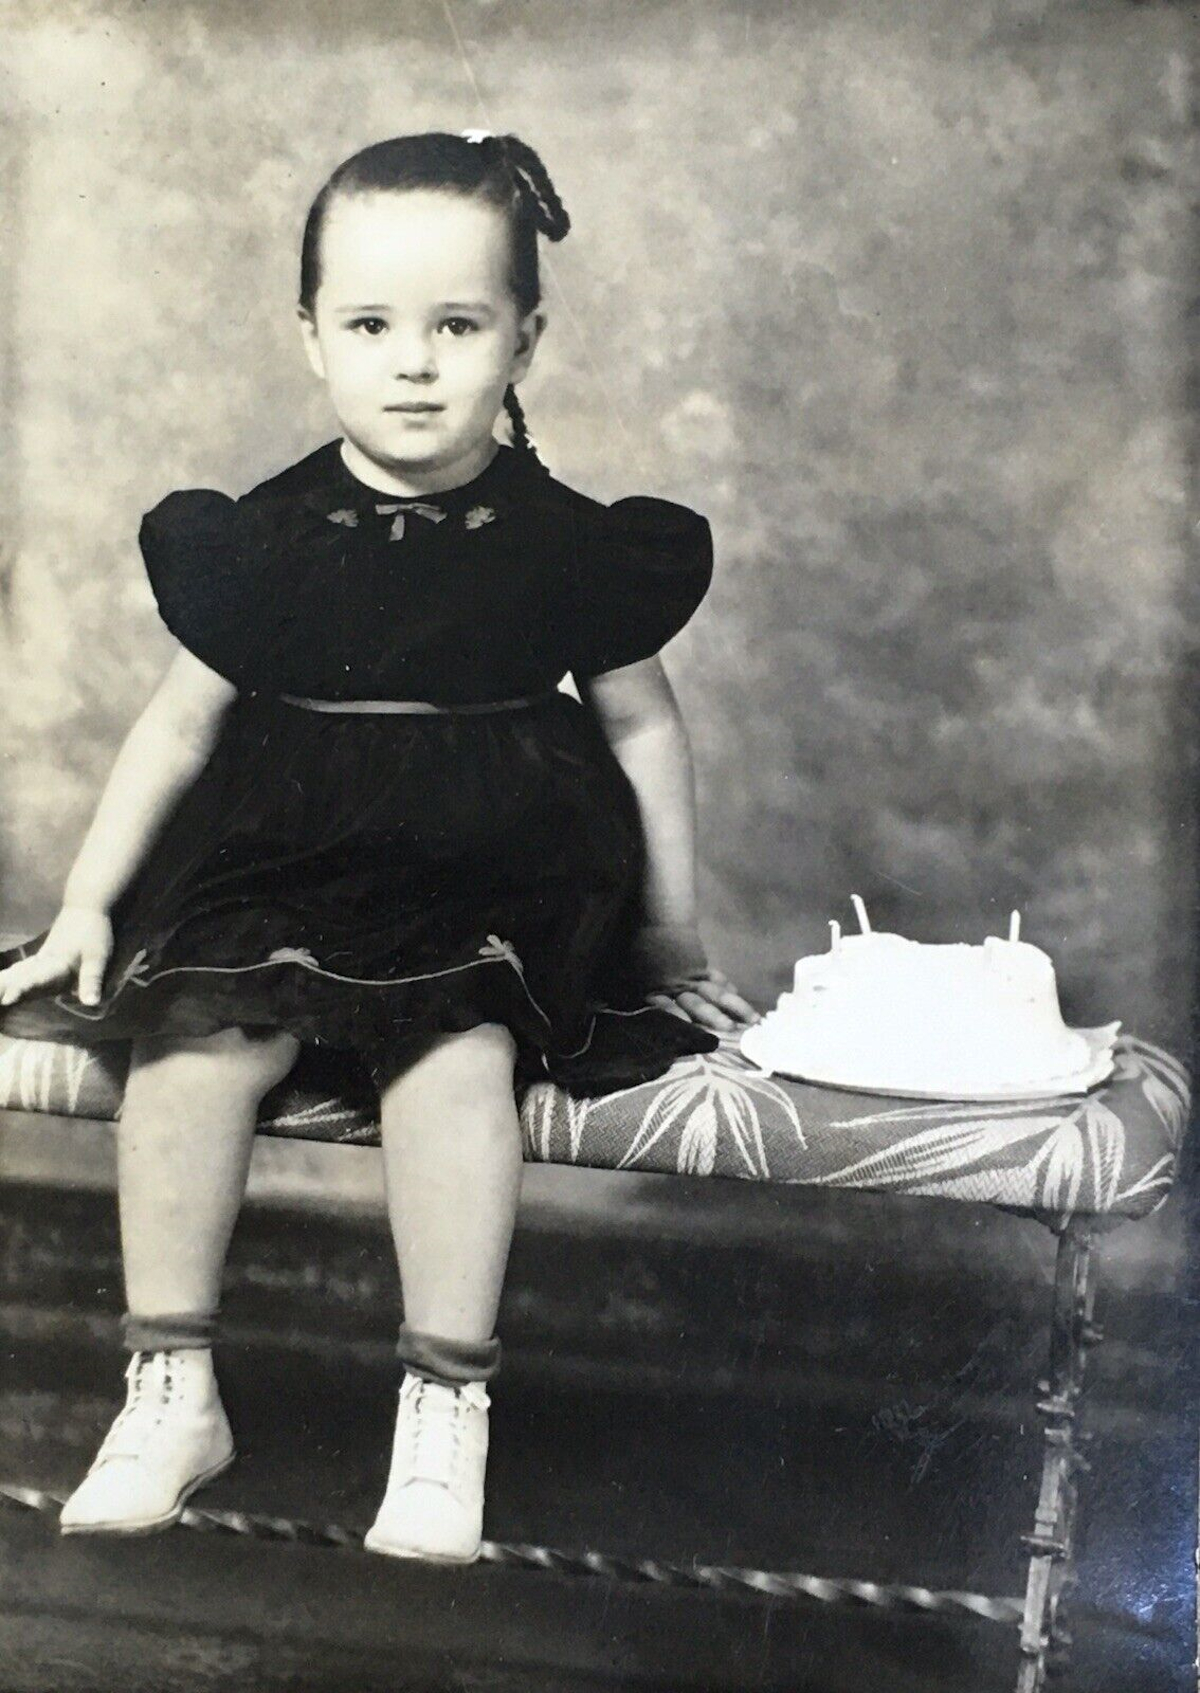 Lubbock Girl's Birthday in 1941